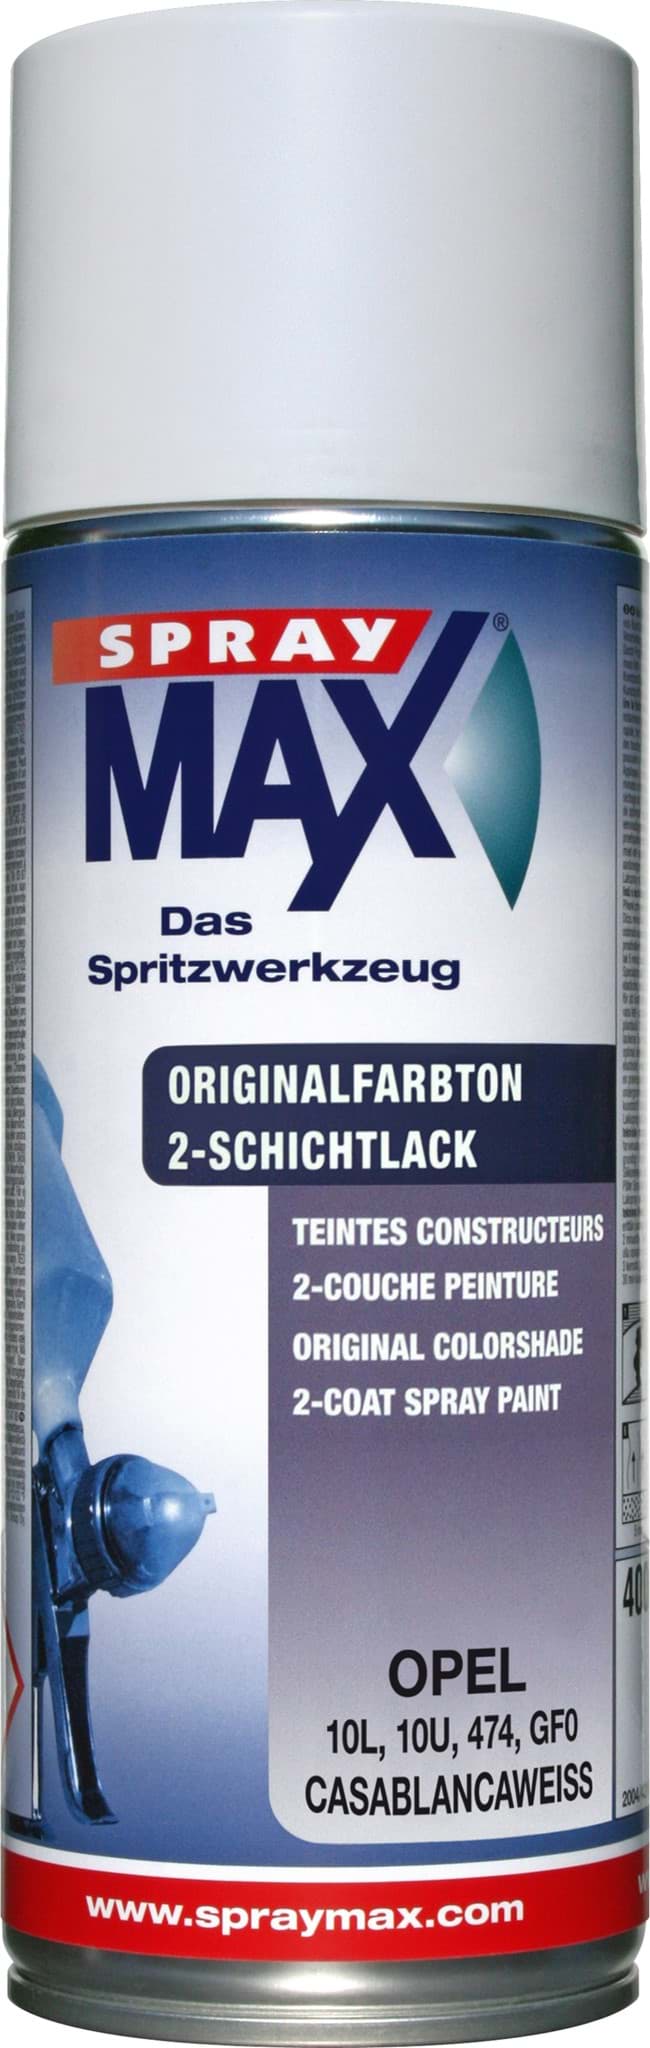 Obraz SprayMax Originalfarbton für Opel 474 casablancaweiss